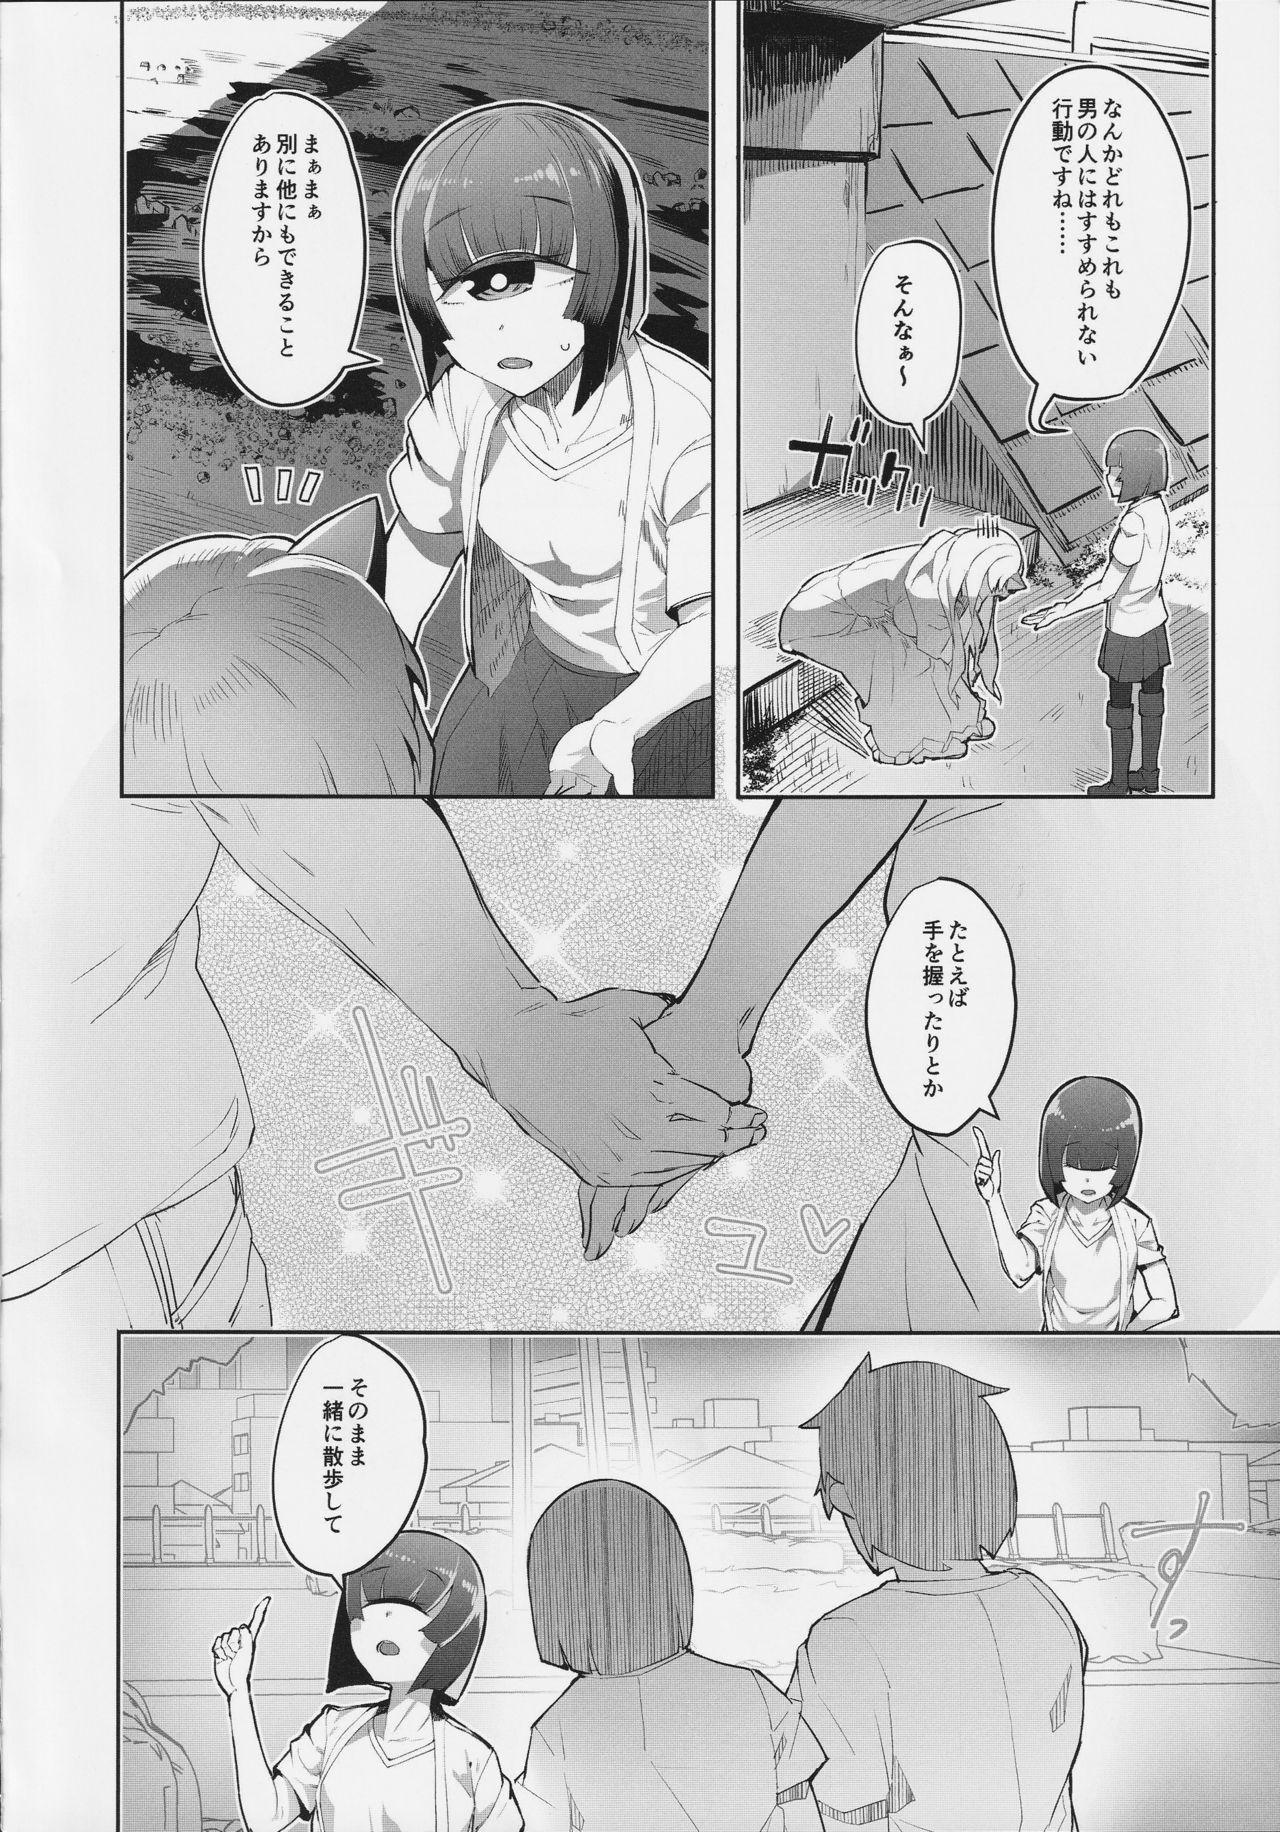 Class Monster Musume no Iru Nichijou SS ANTHOLOGY - Everyday Life with Monster Girls - Monster musume no iru nichijou Bro - Page 9